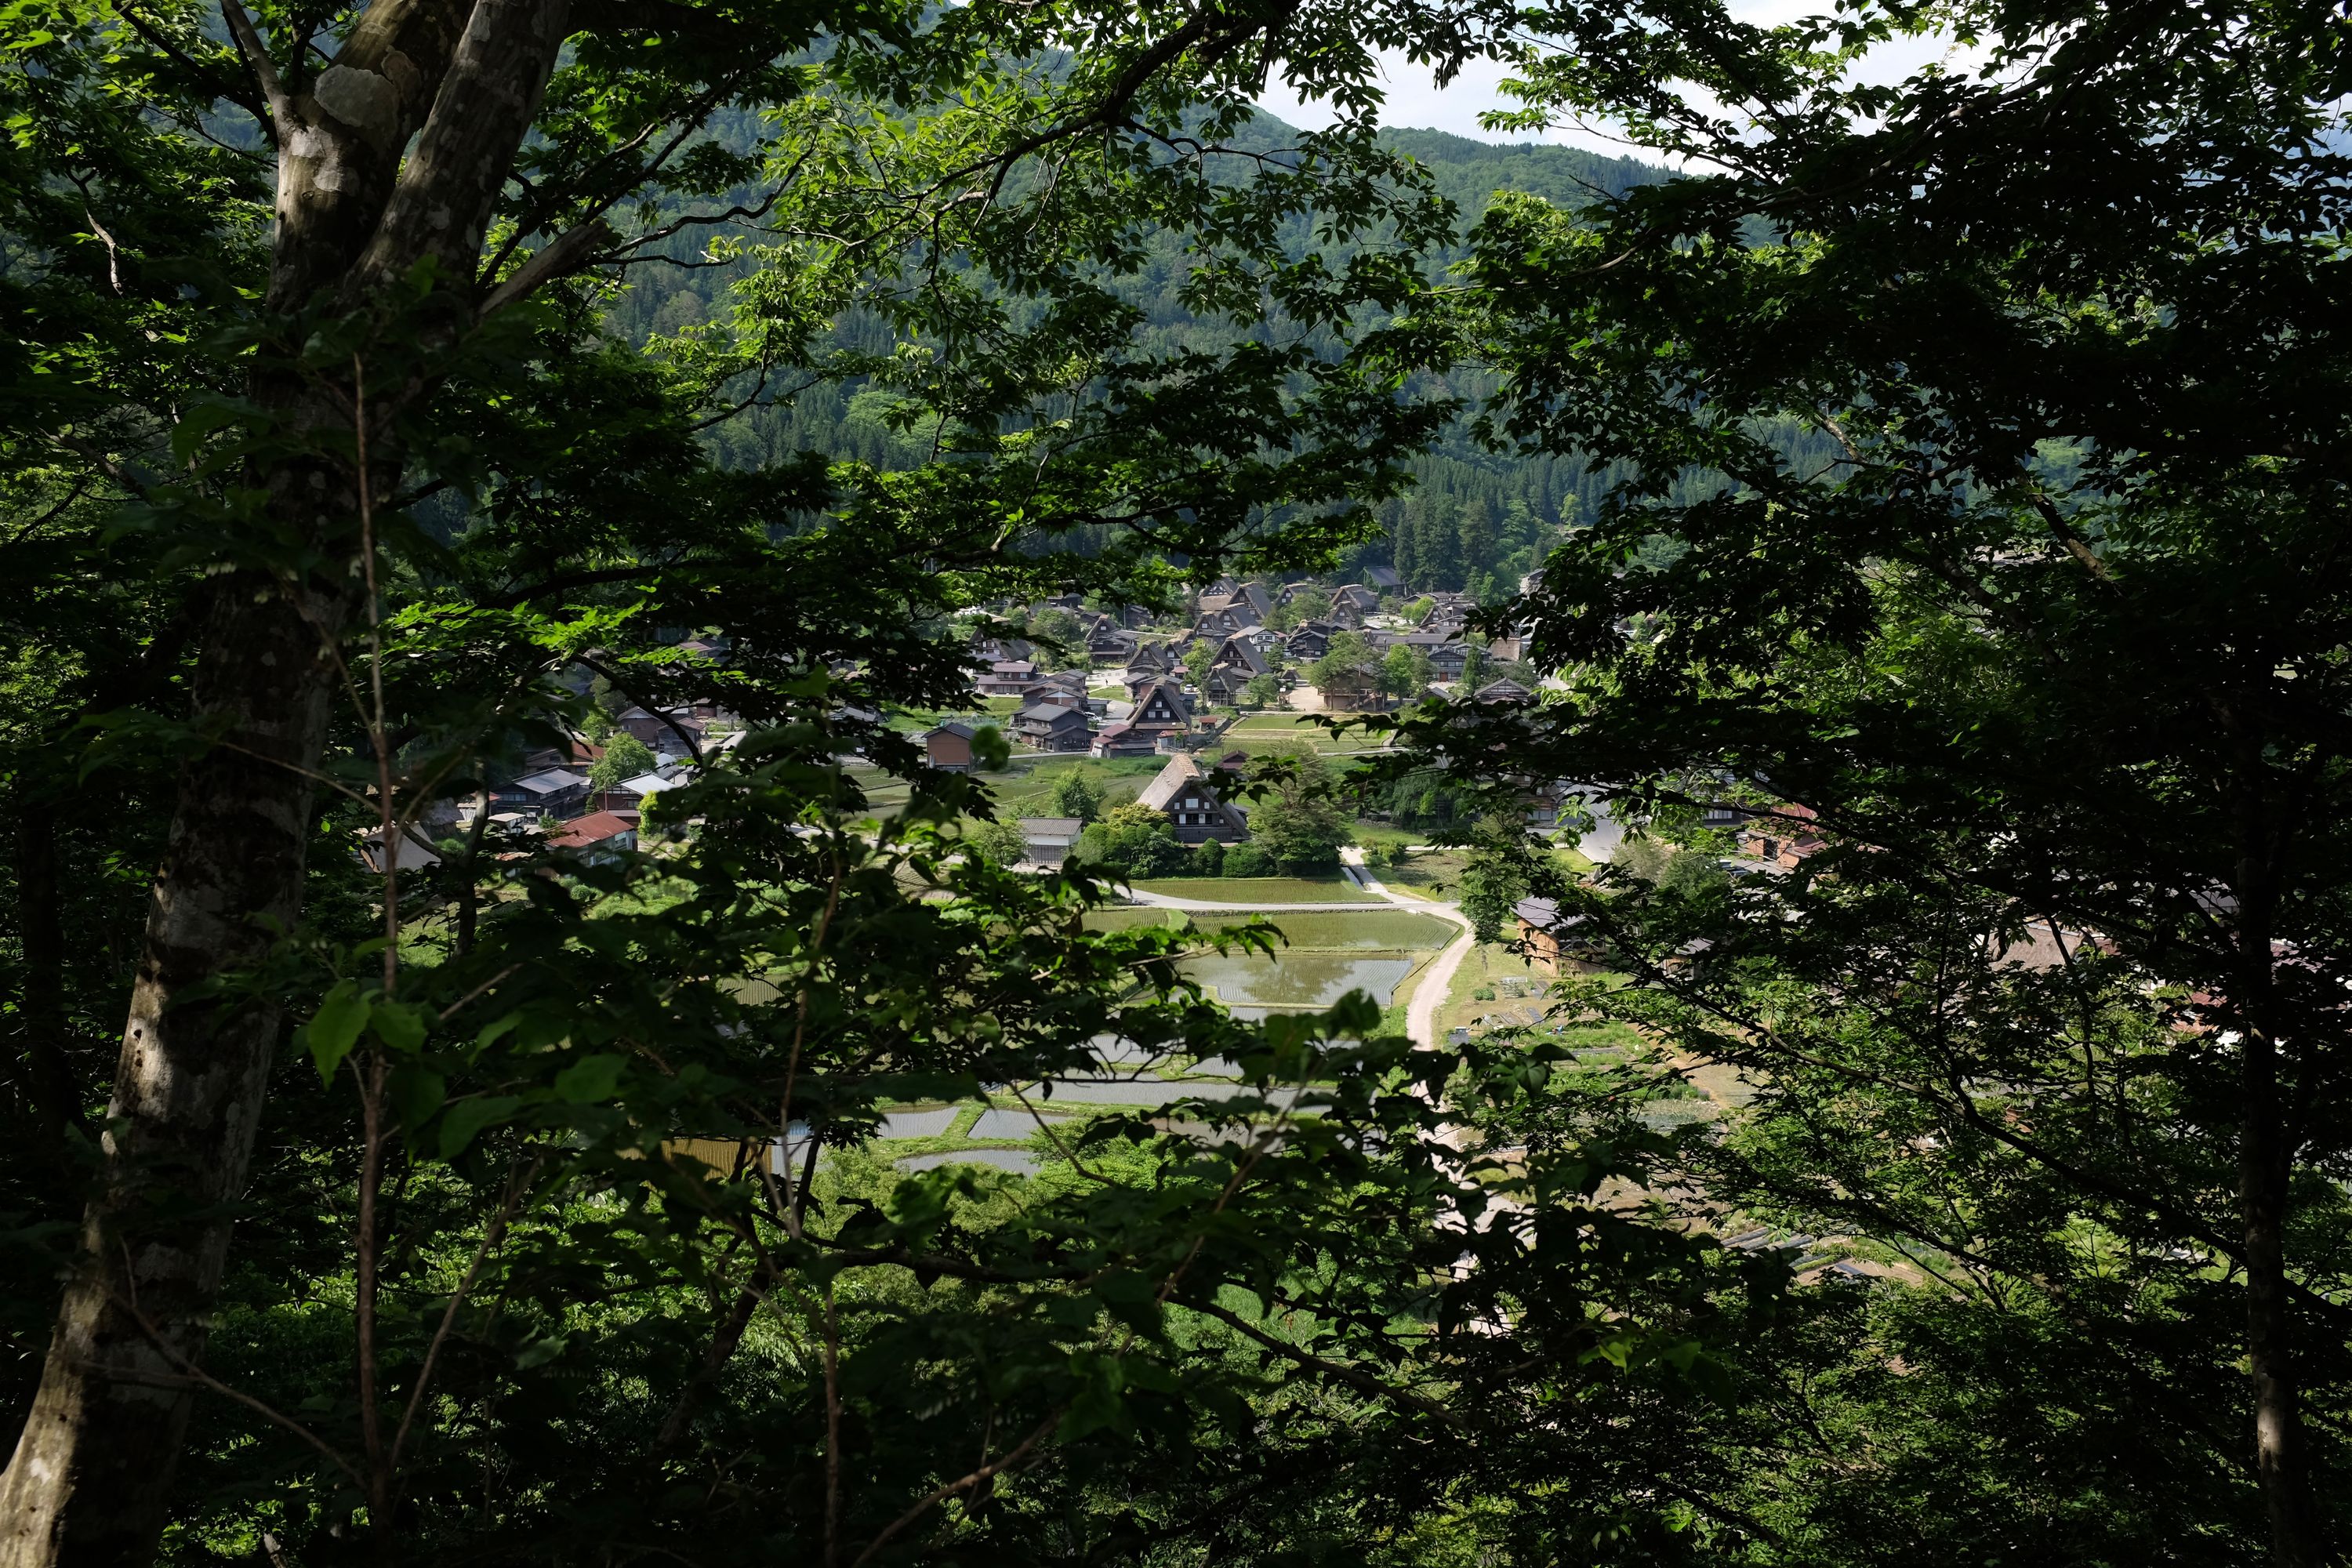 View of the village of Ogimachi through foliage.